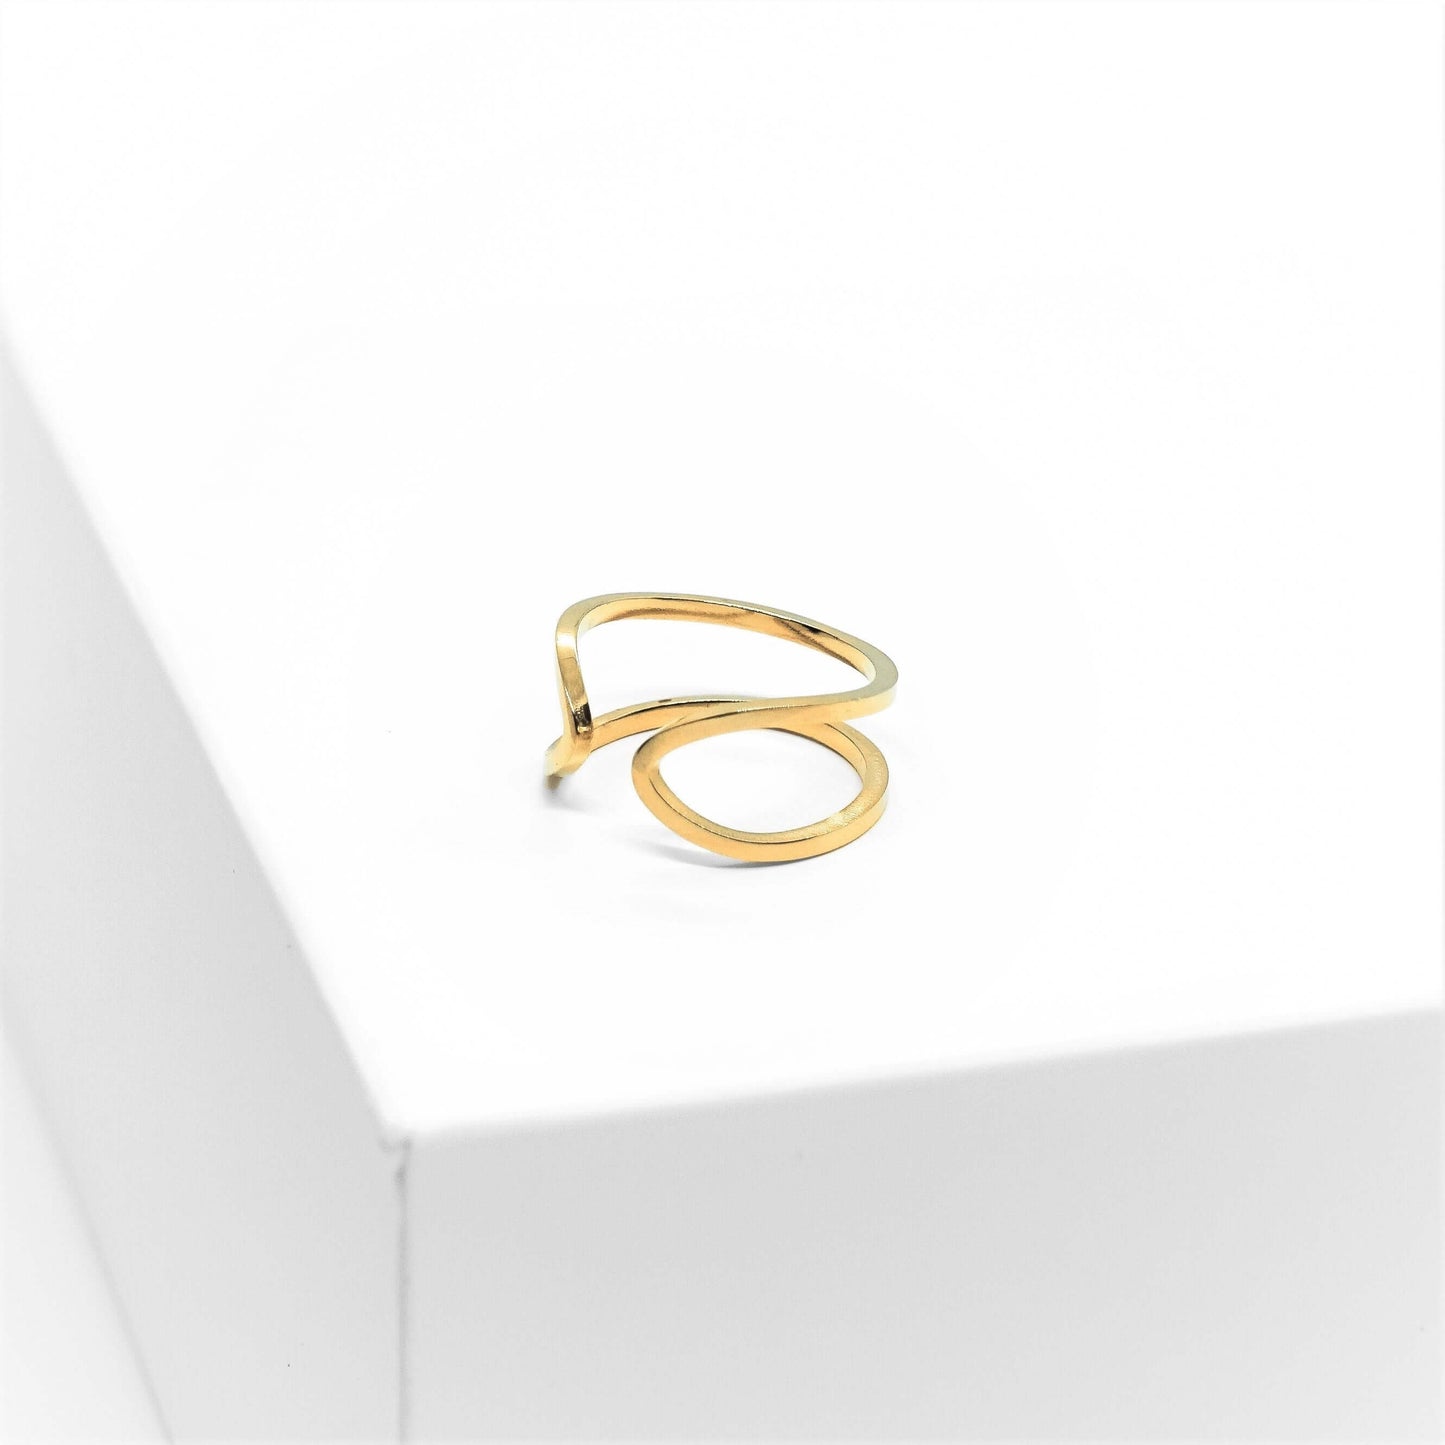 Madilyn Ring - kultainen sormus - Jewelbox